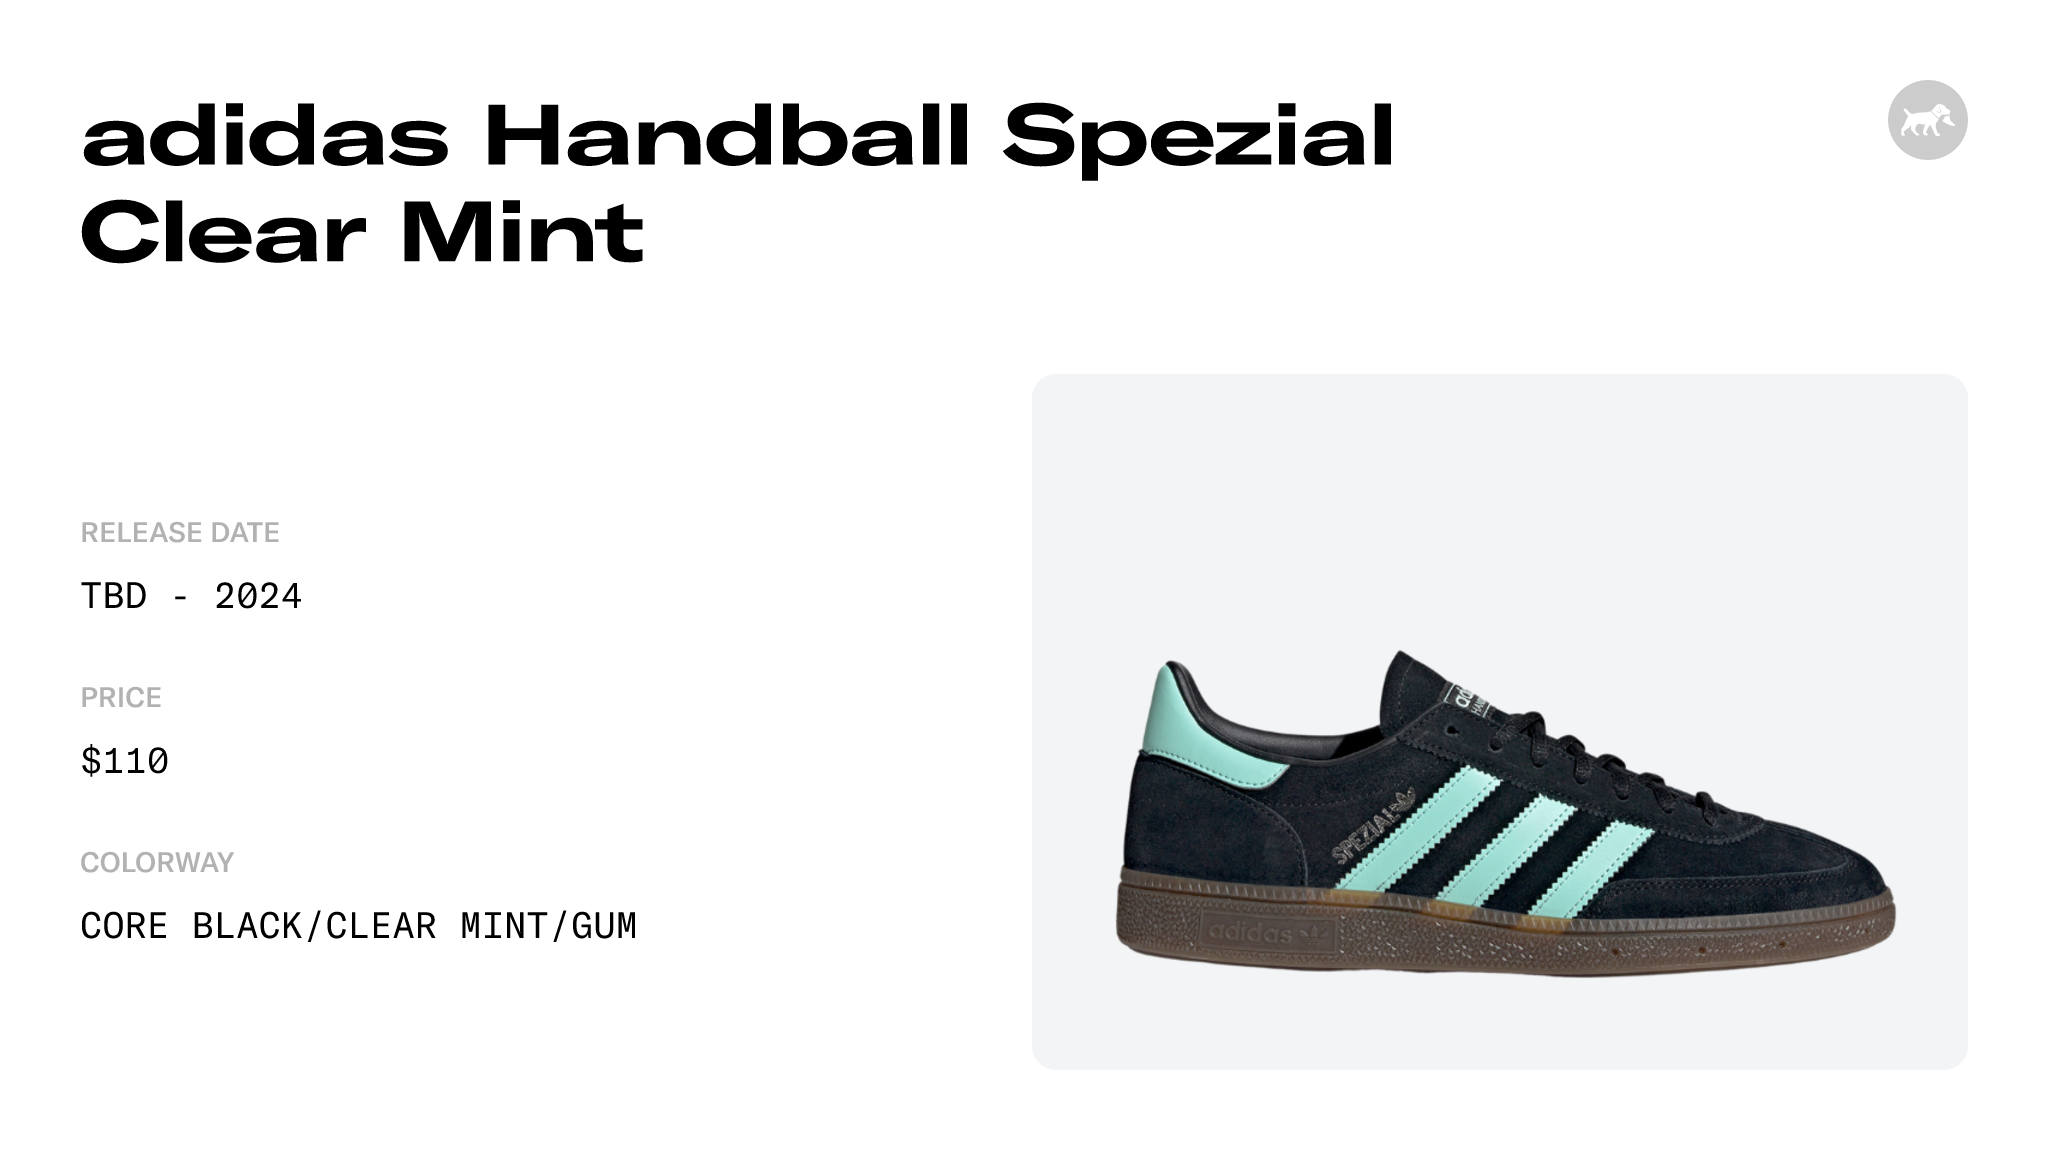 adidas Handball Spezial Clear Mint - IH7491 Raffles and Release Date